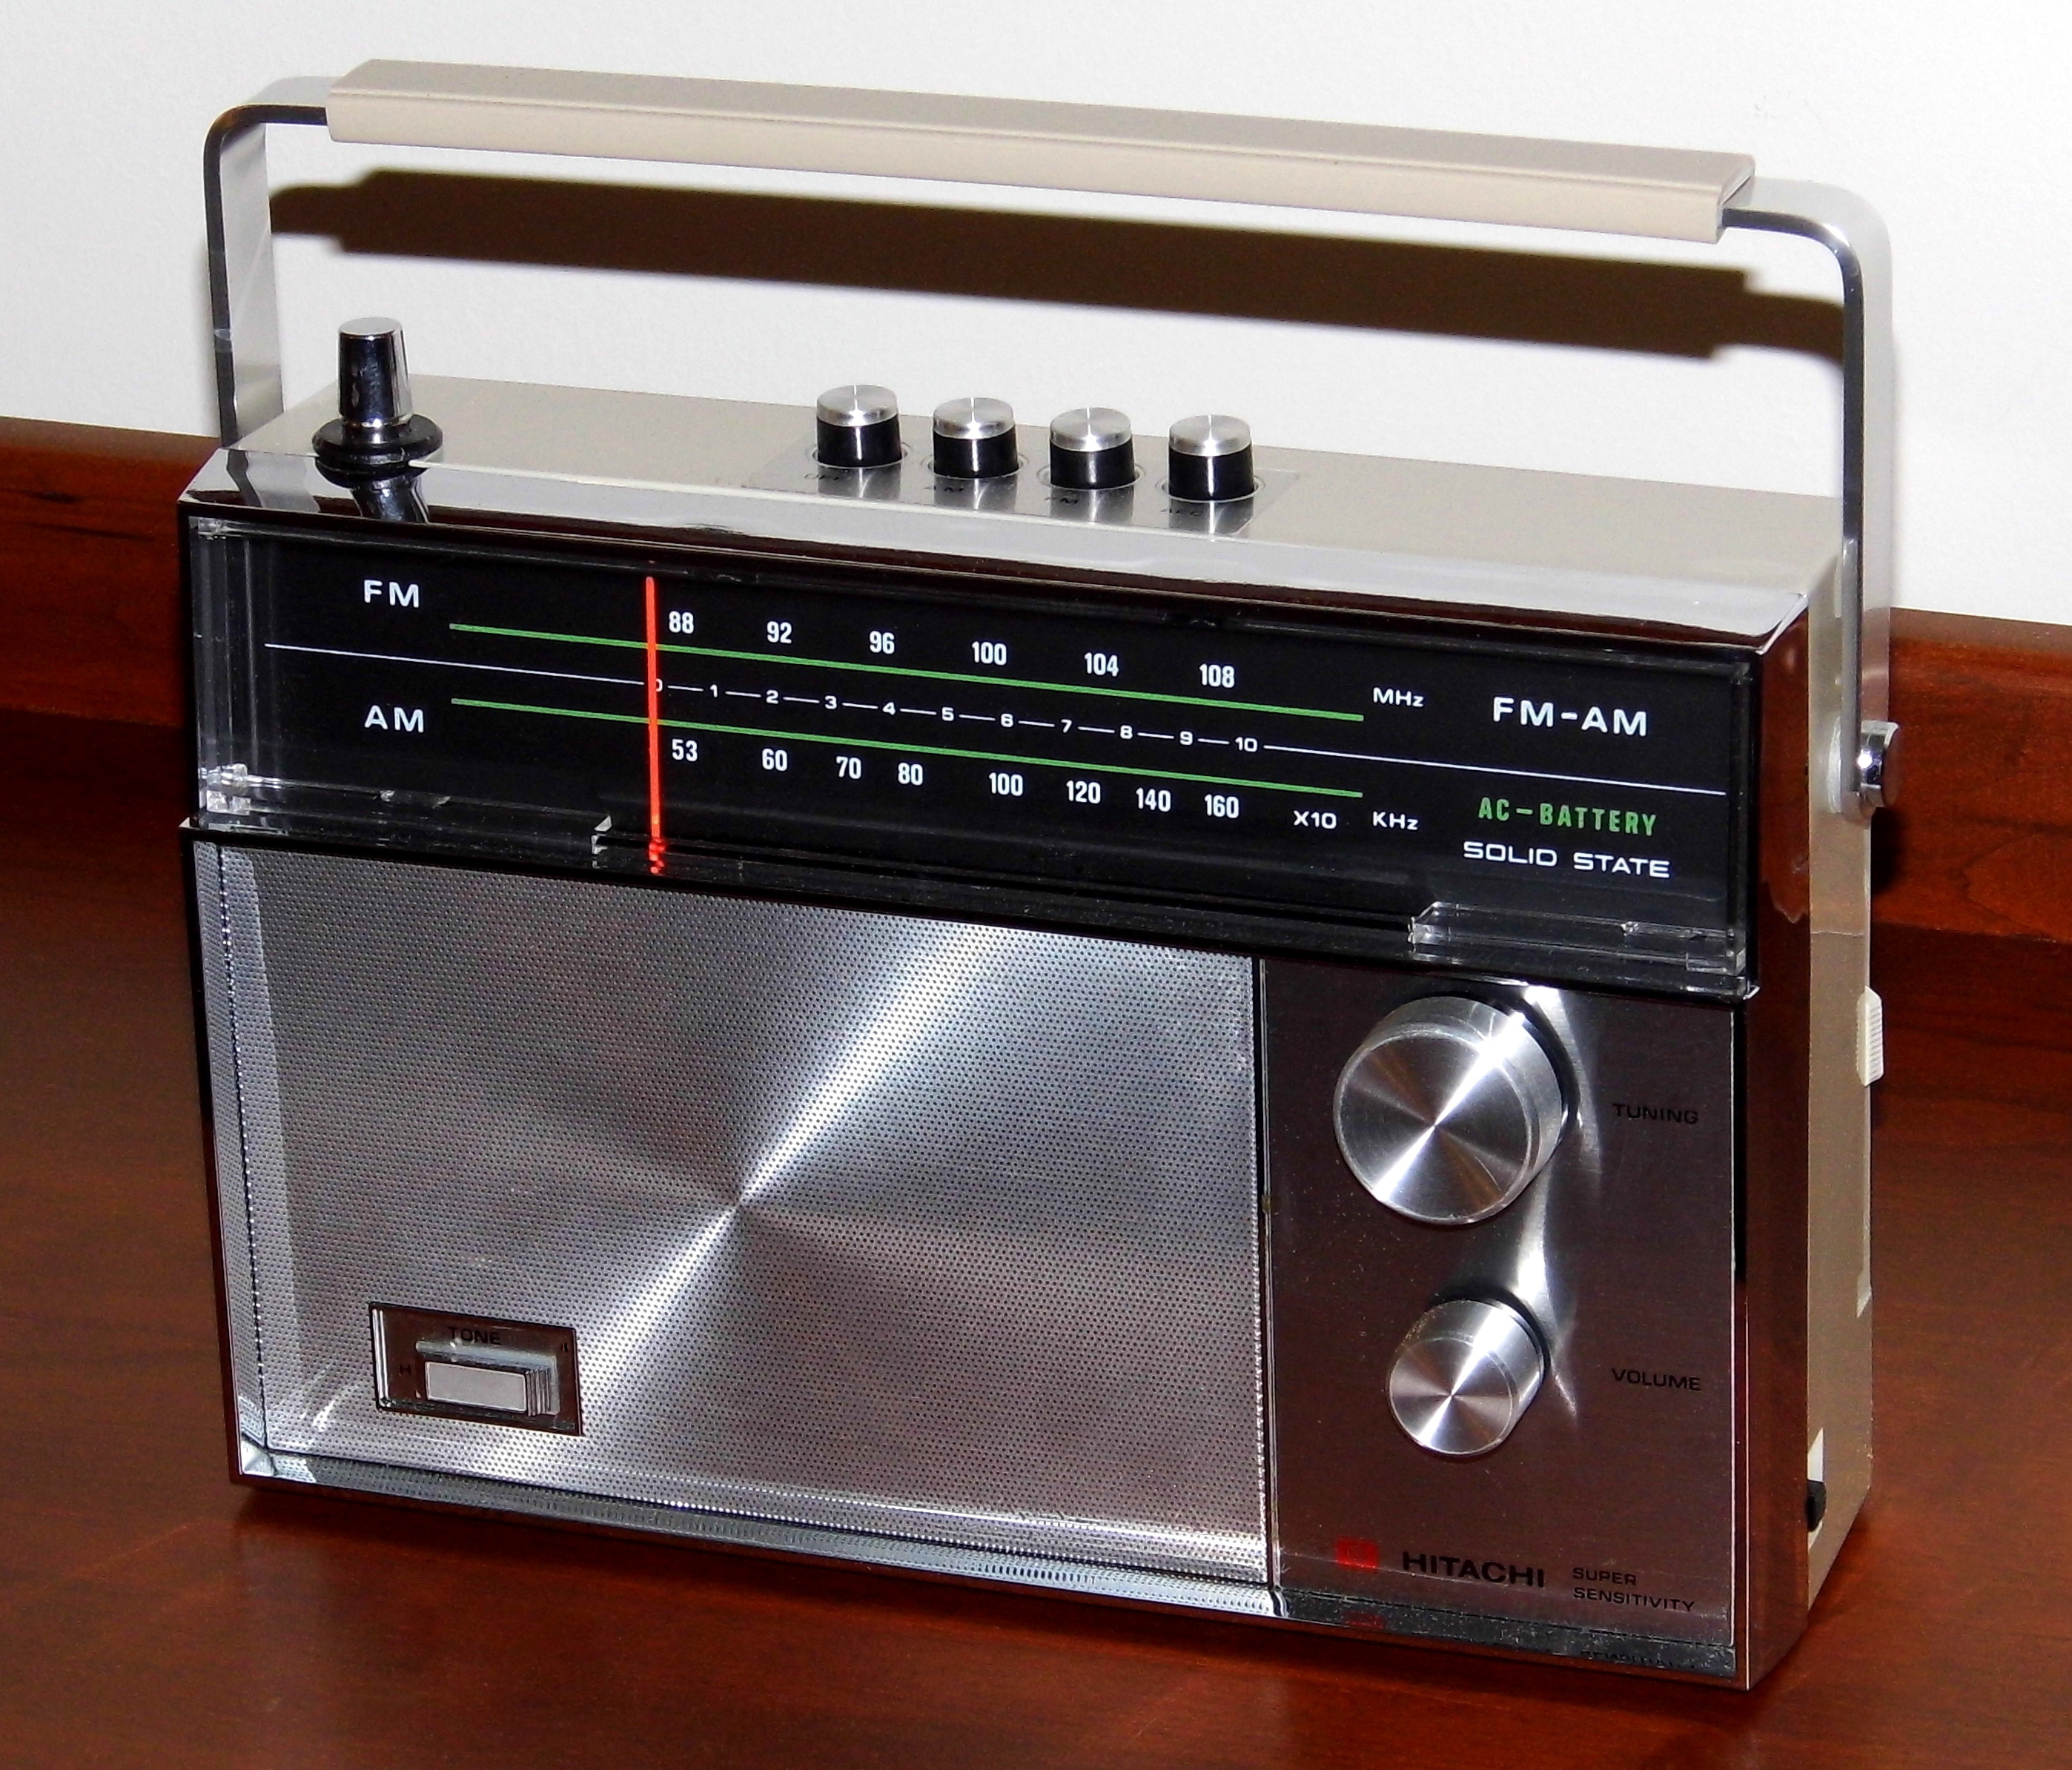 File:Vintage Hitachi Portable Transistor Radio, Model KH-1016H, FM